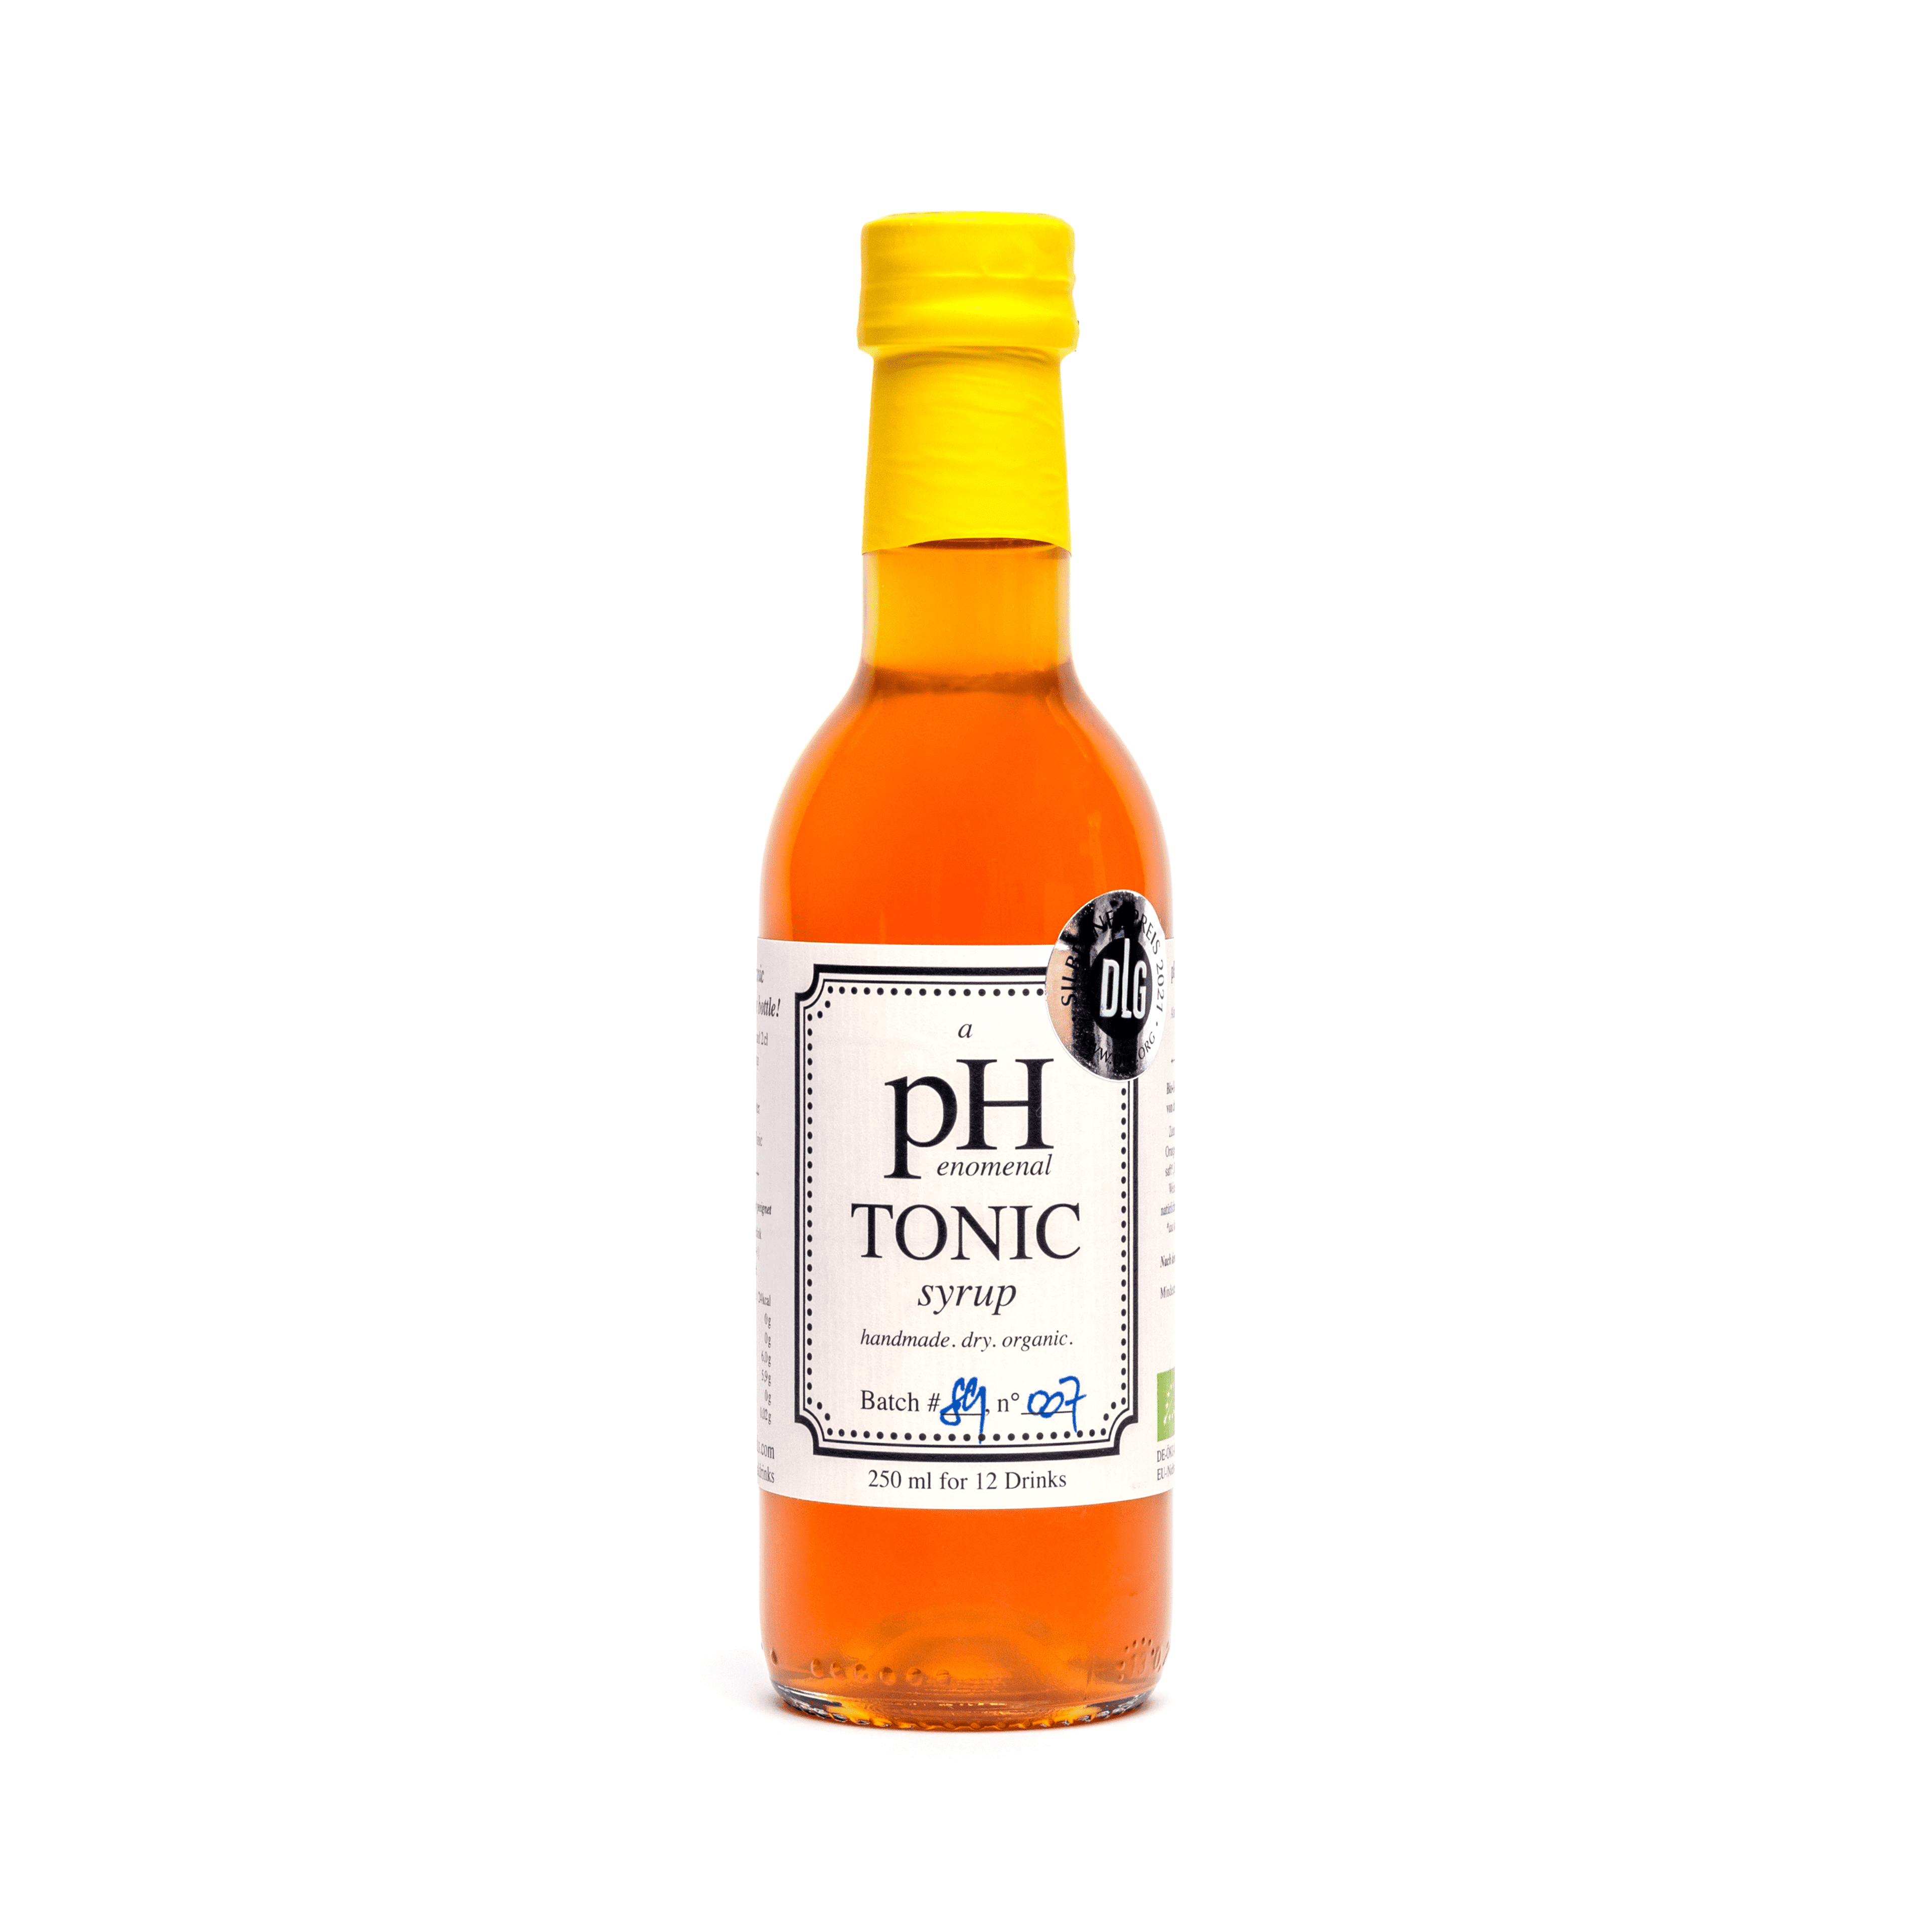 pHenomenal Tonic Syrup BIO in glass bottle